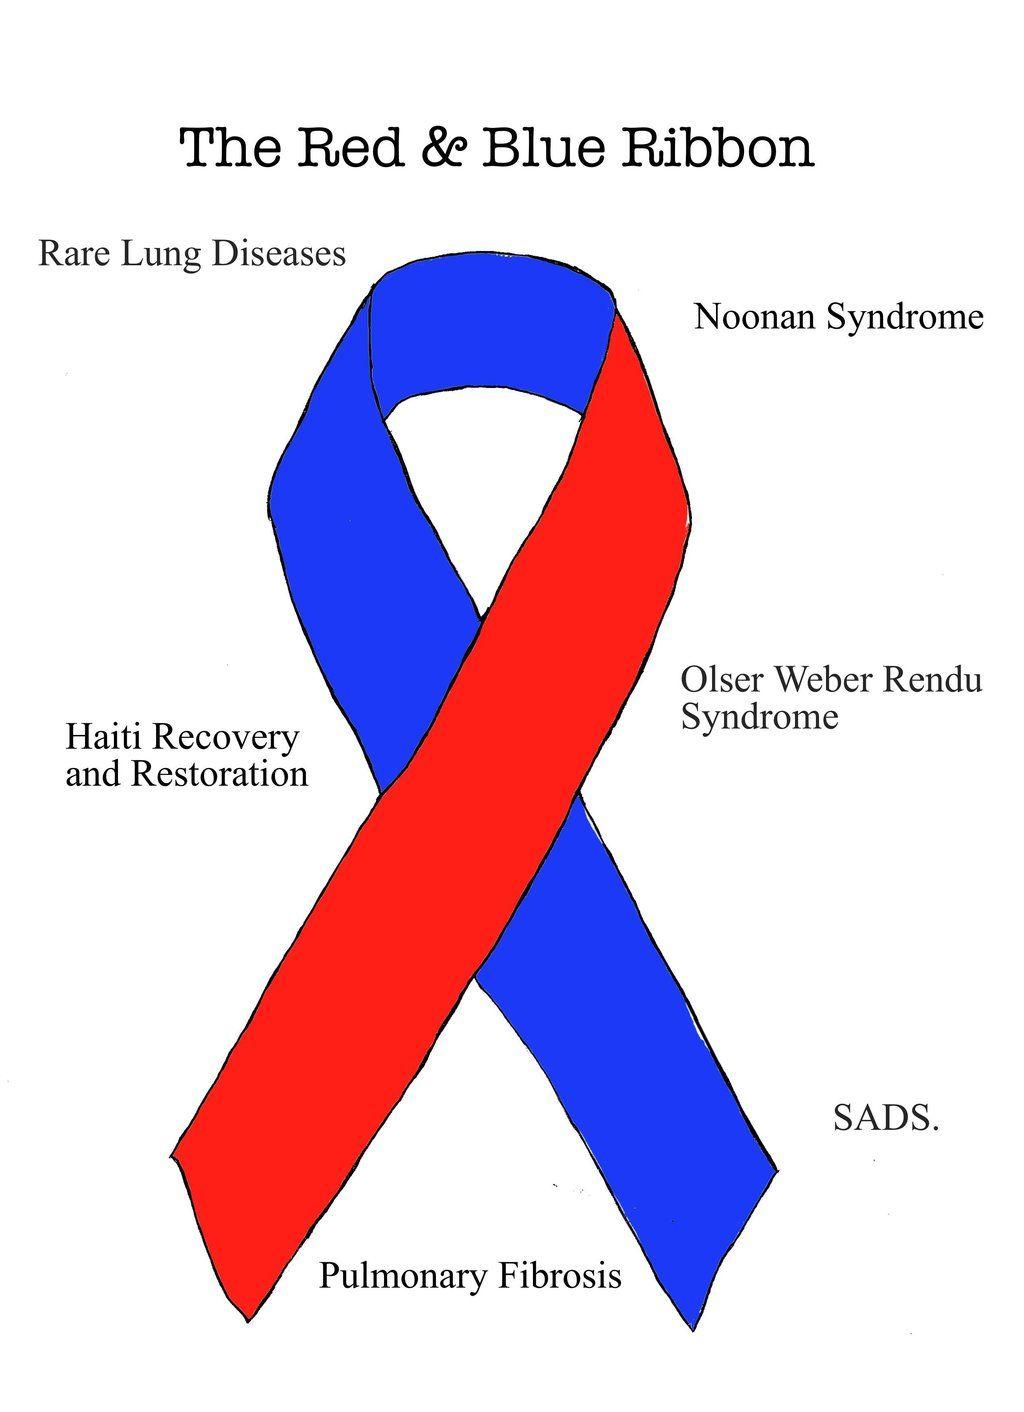 Blue and Red Ribbon Logo - Red and blue ribbon Logos